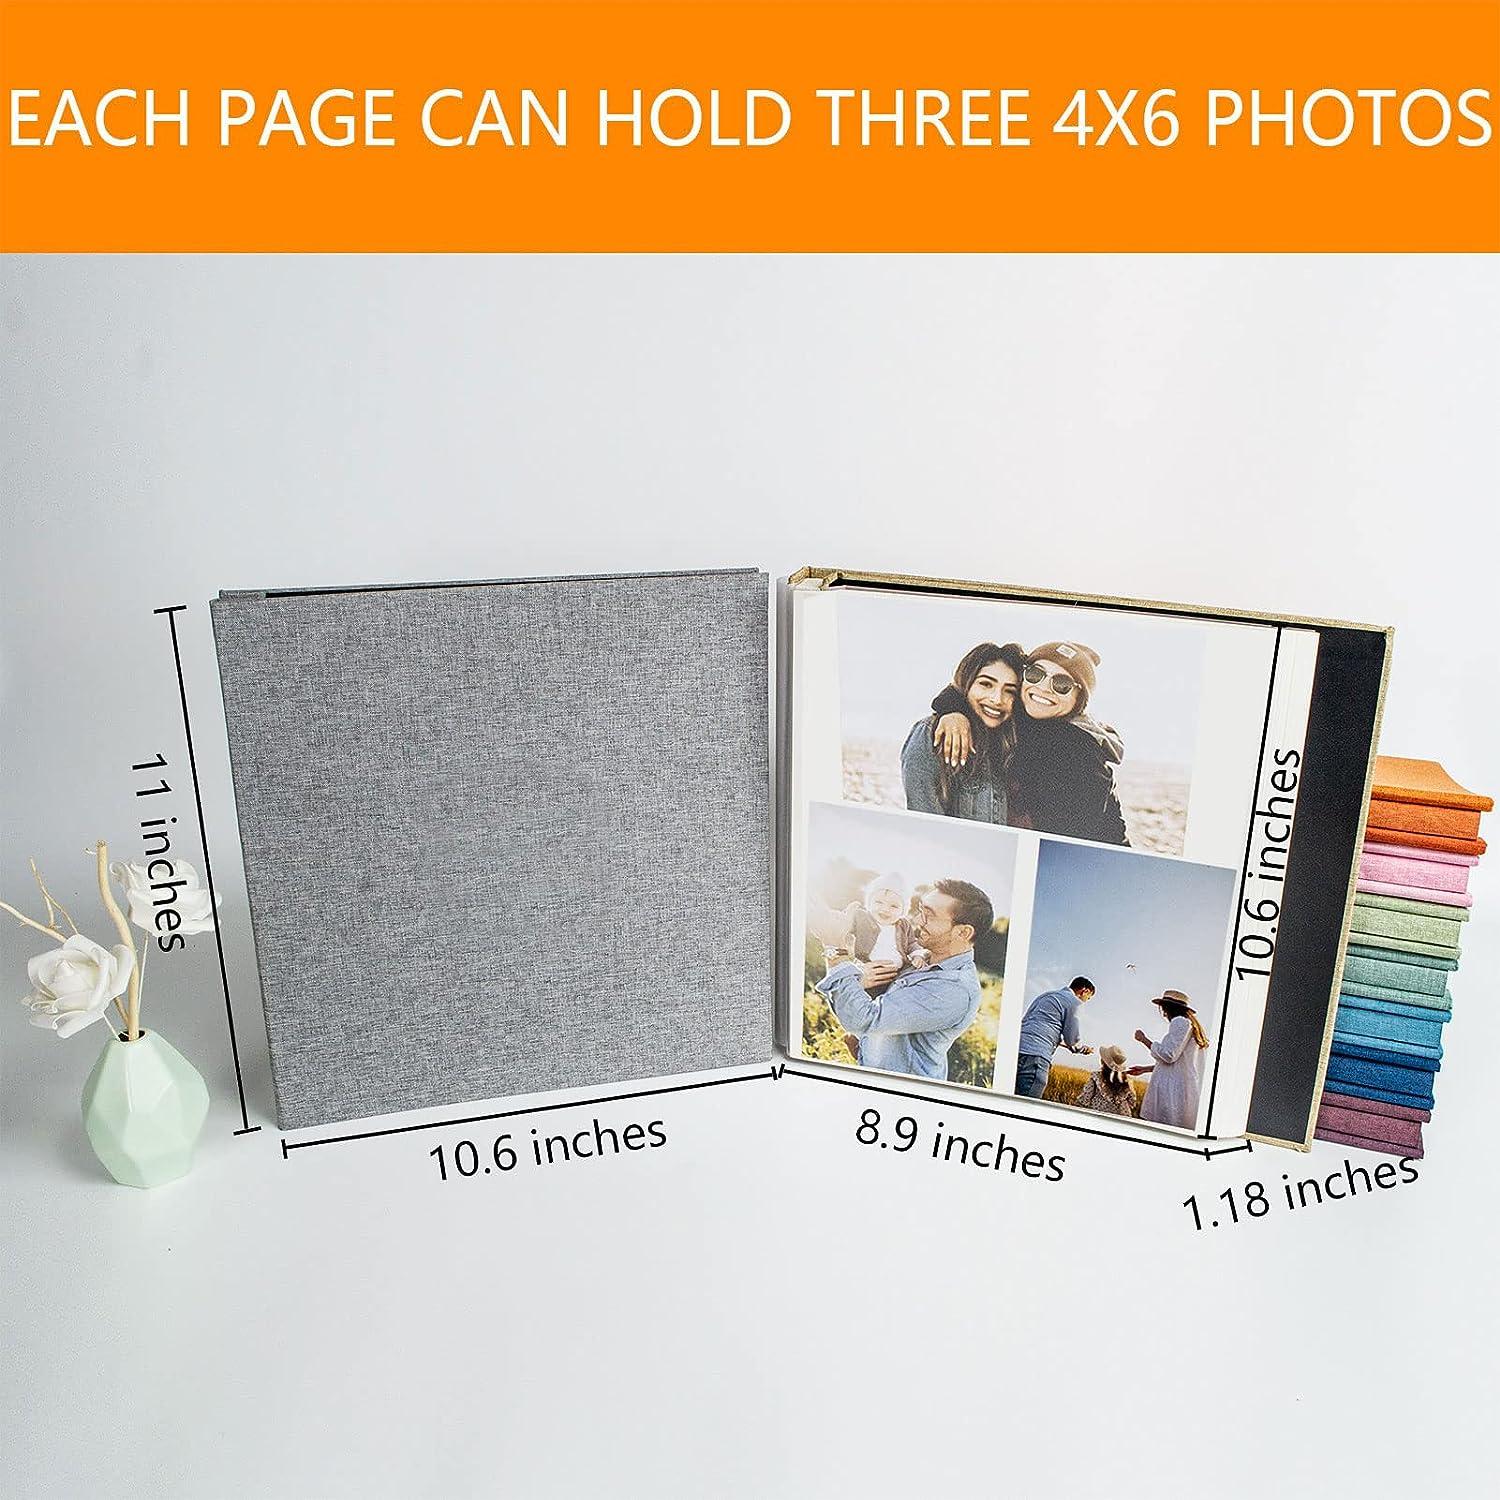  Photo Album Self Adhesive Pages Scrapbook Magnetic